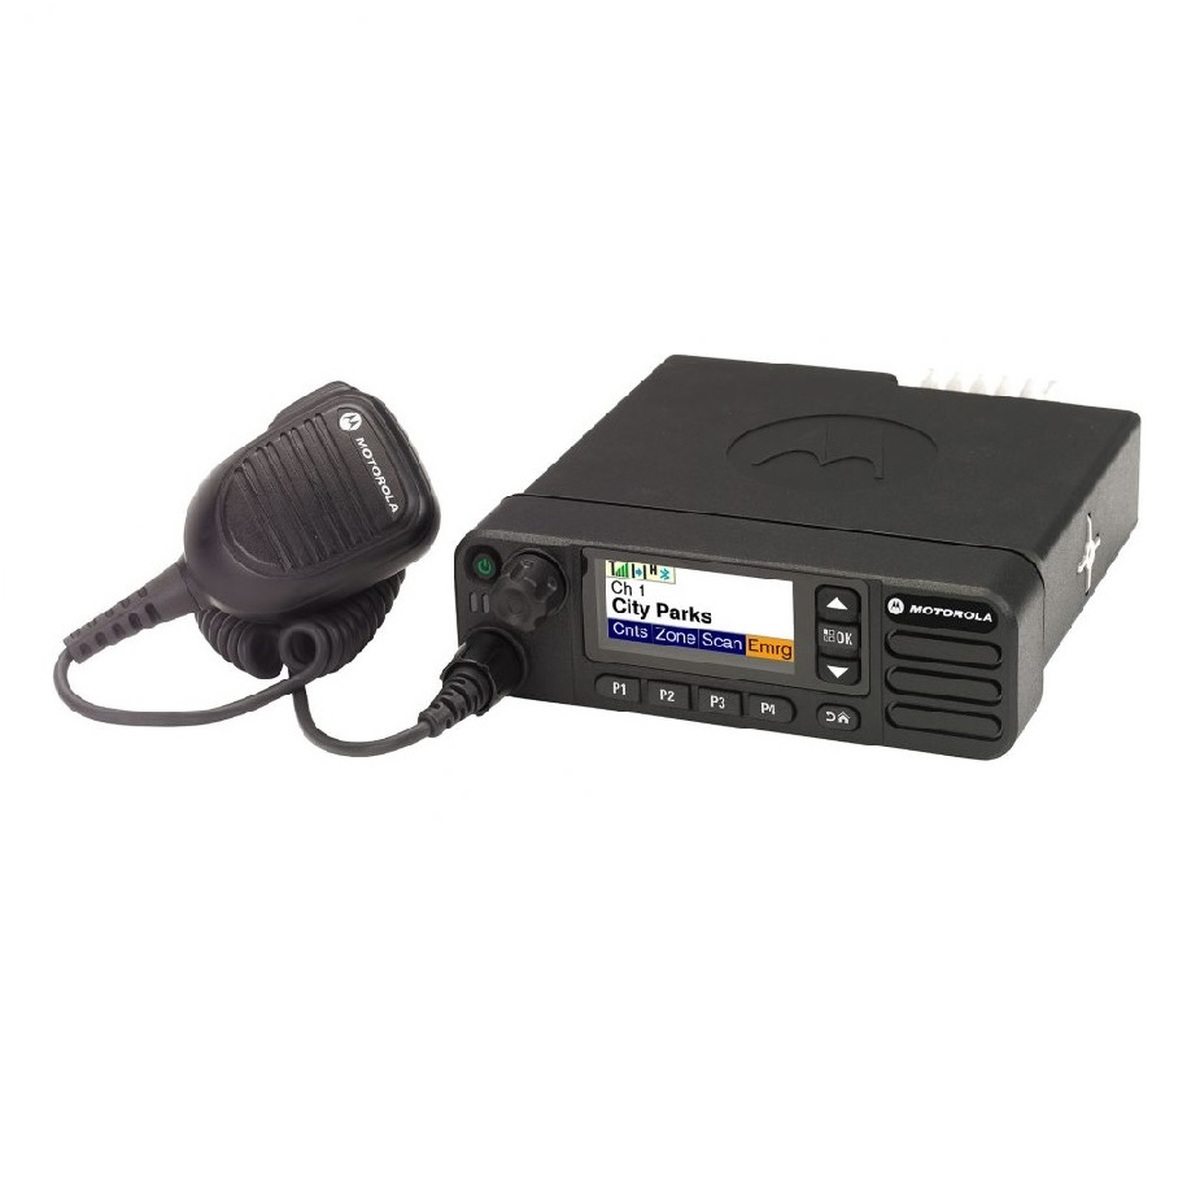 Radio Motorola DGM8500 Digital LAM28JQN9KA1AN VHF 136-174 MHz de 45W